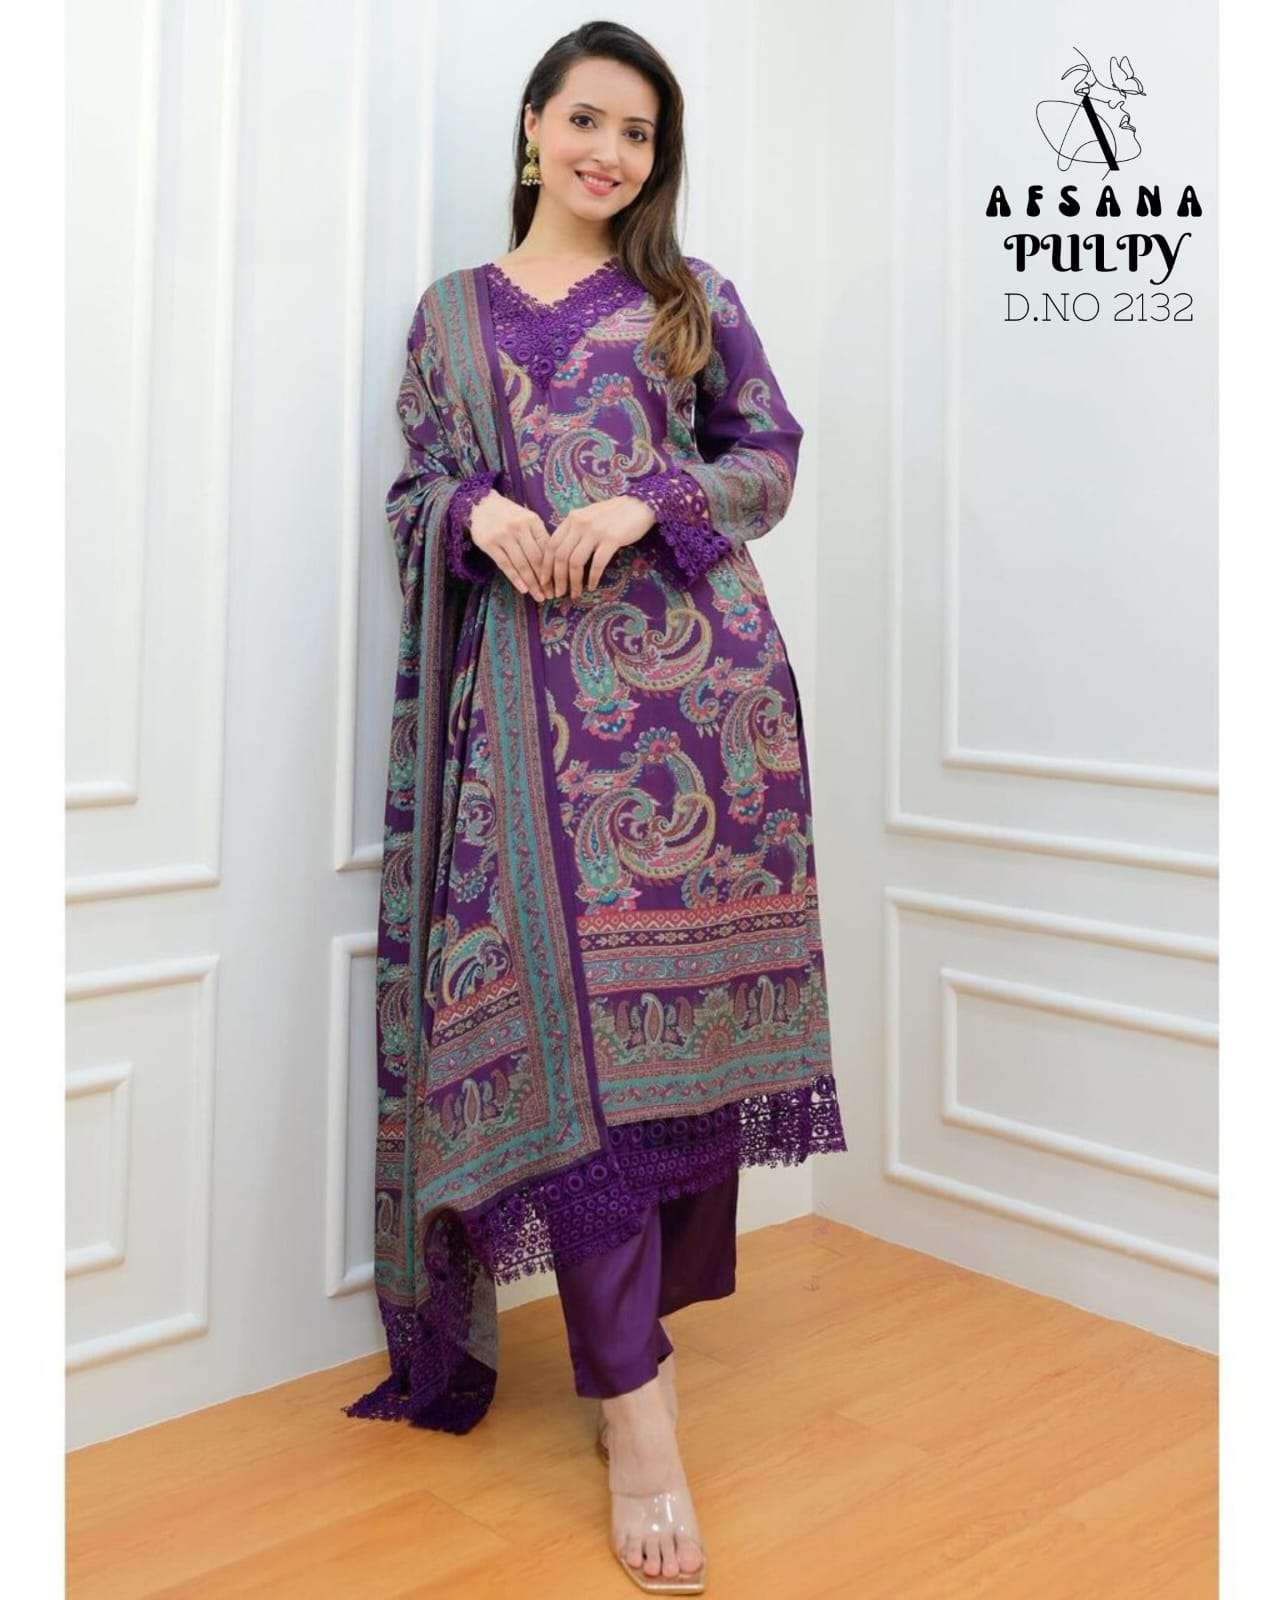 Afsana Pulpy 2132 Pakistani Designs Muslin Suit Readymade Catalog